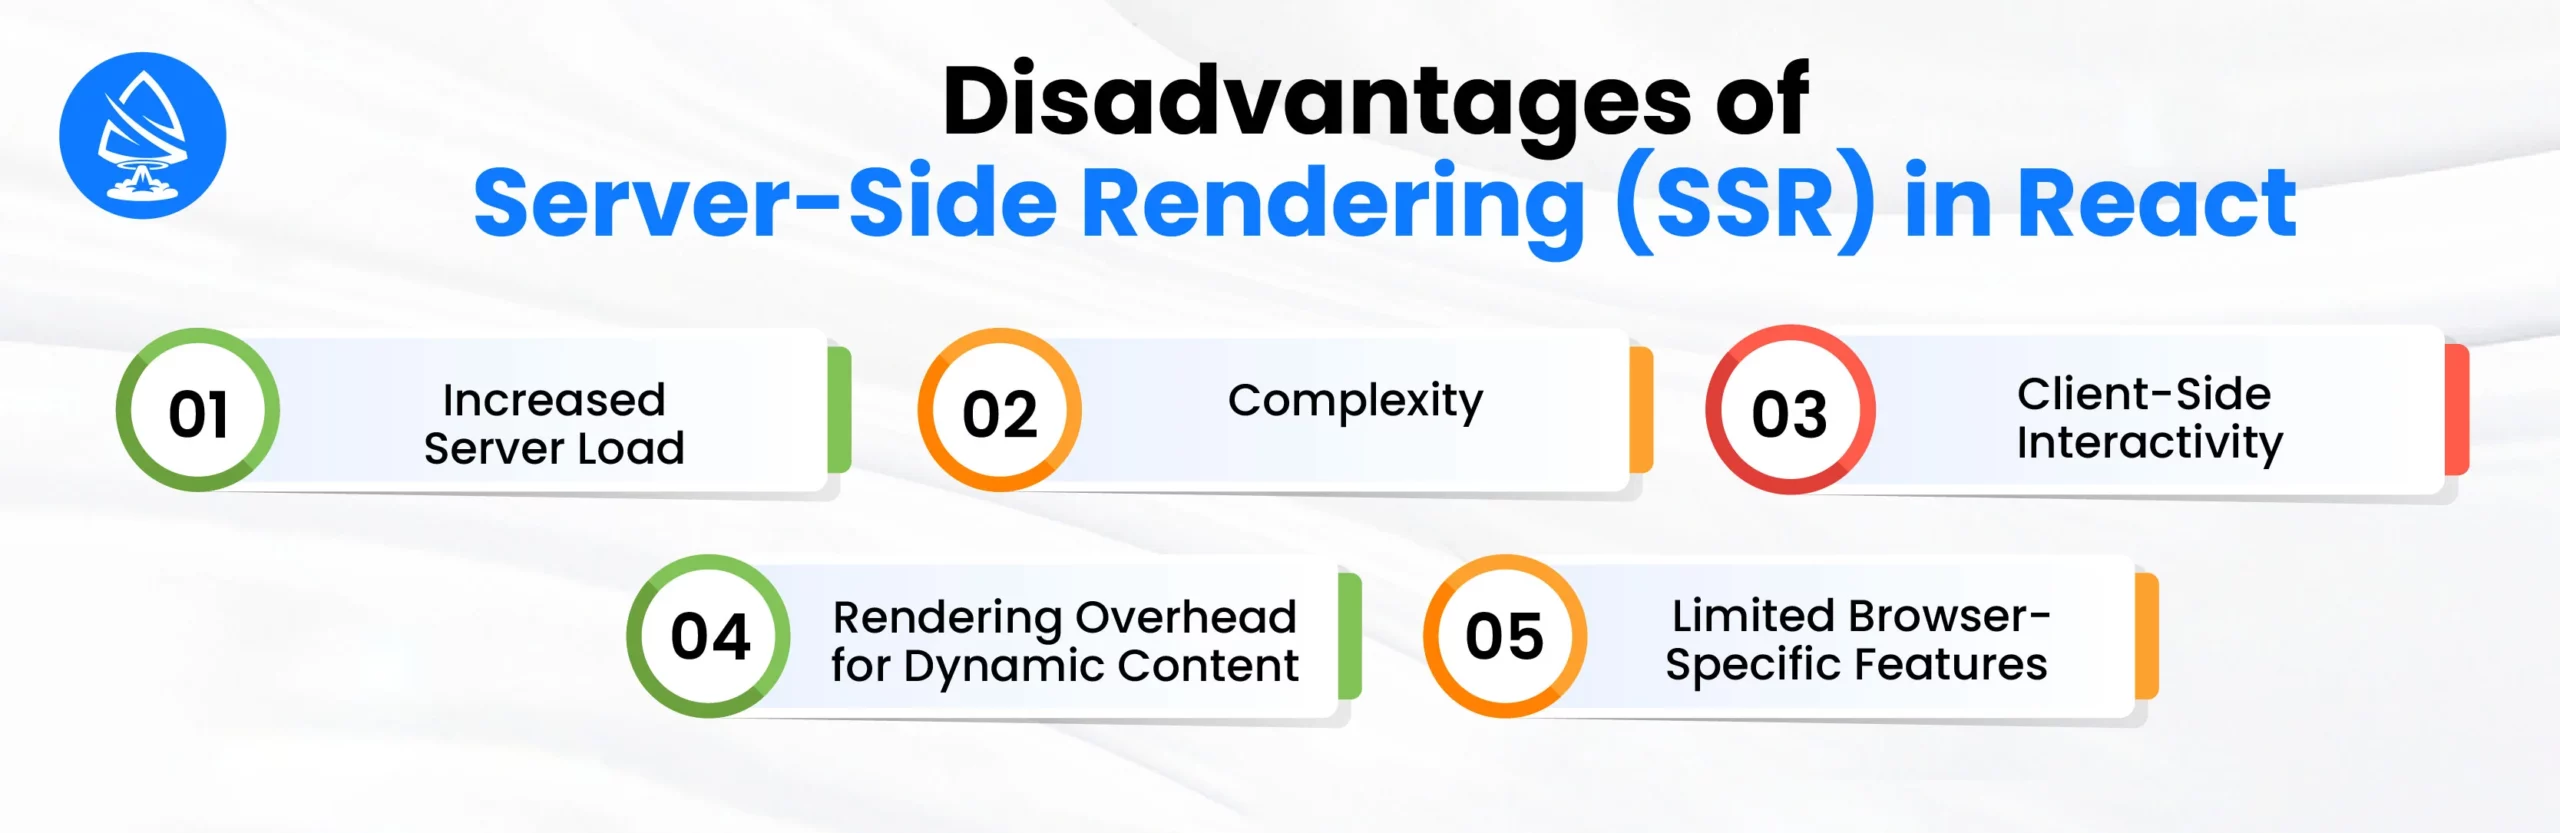 Disadvantages of Server-Side Rendering (SSR) in React